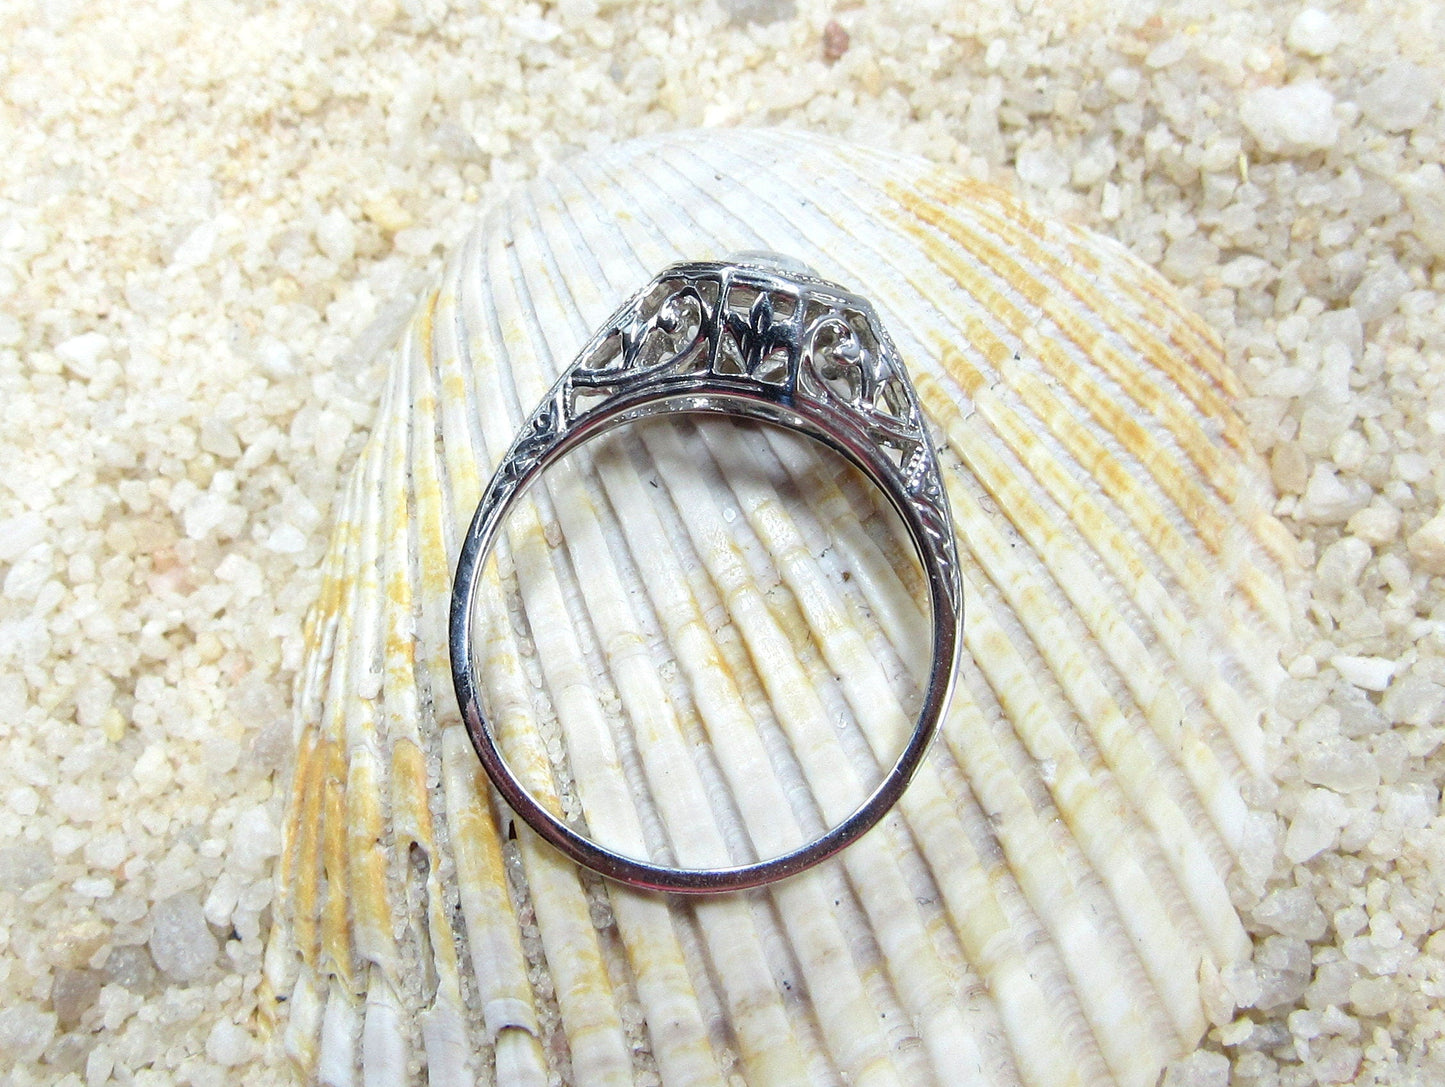 Vintage Brown Black Diamond Engagement Ring Antique Style Filigree Round Kassandra .60ct 5mm Custom White-Yellow-Rose Gold-10k-14k-18k-Plat BellaMoreDesign.com